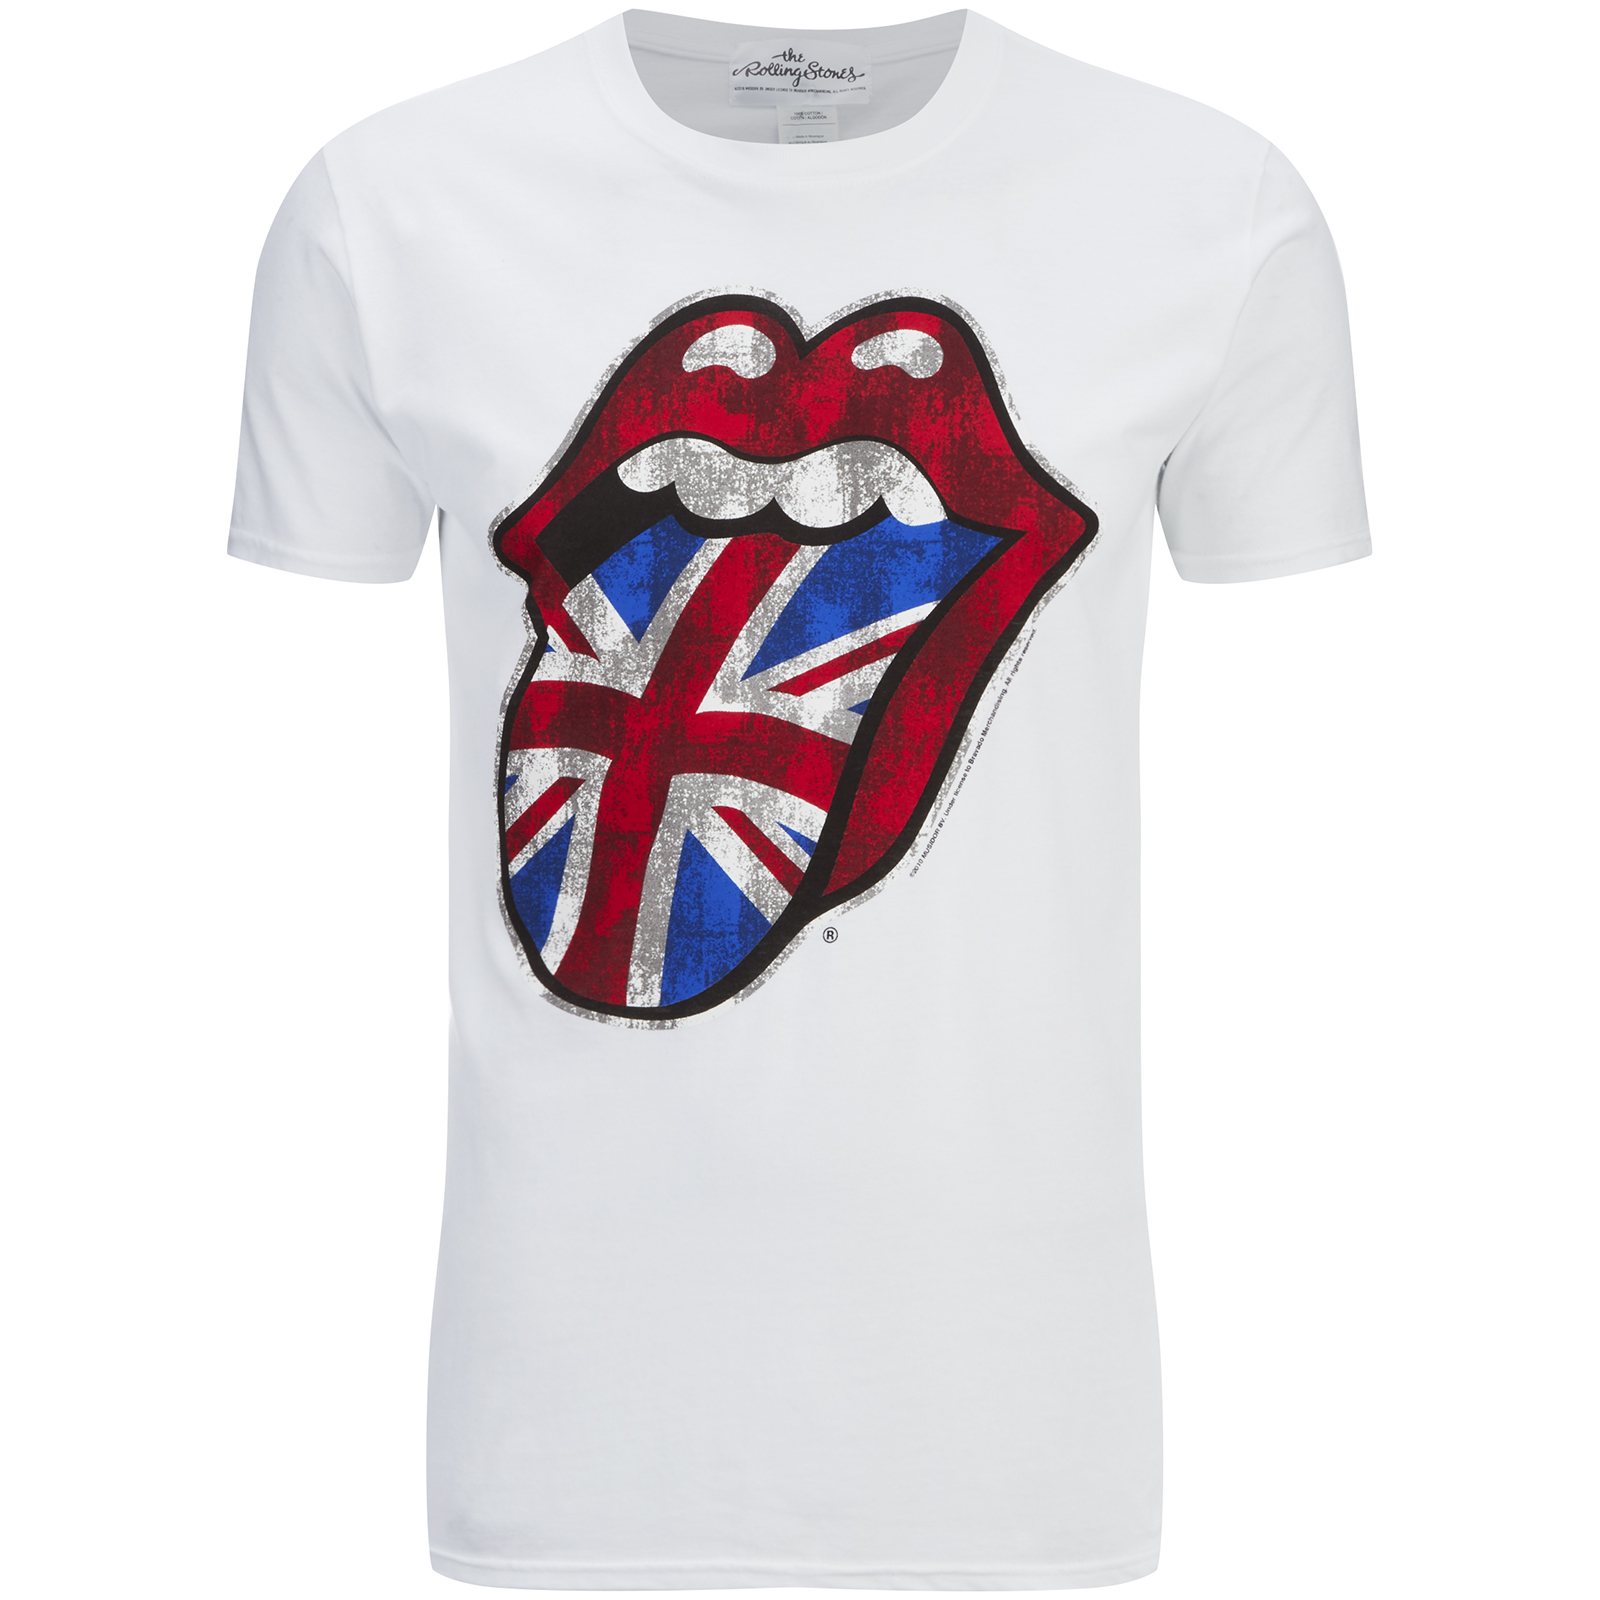 Rolling Stones Men's UK Tongue T-Shirt - White - M